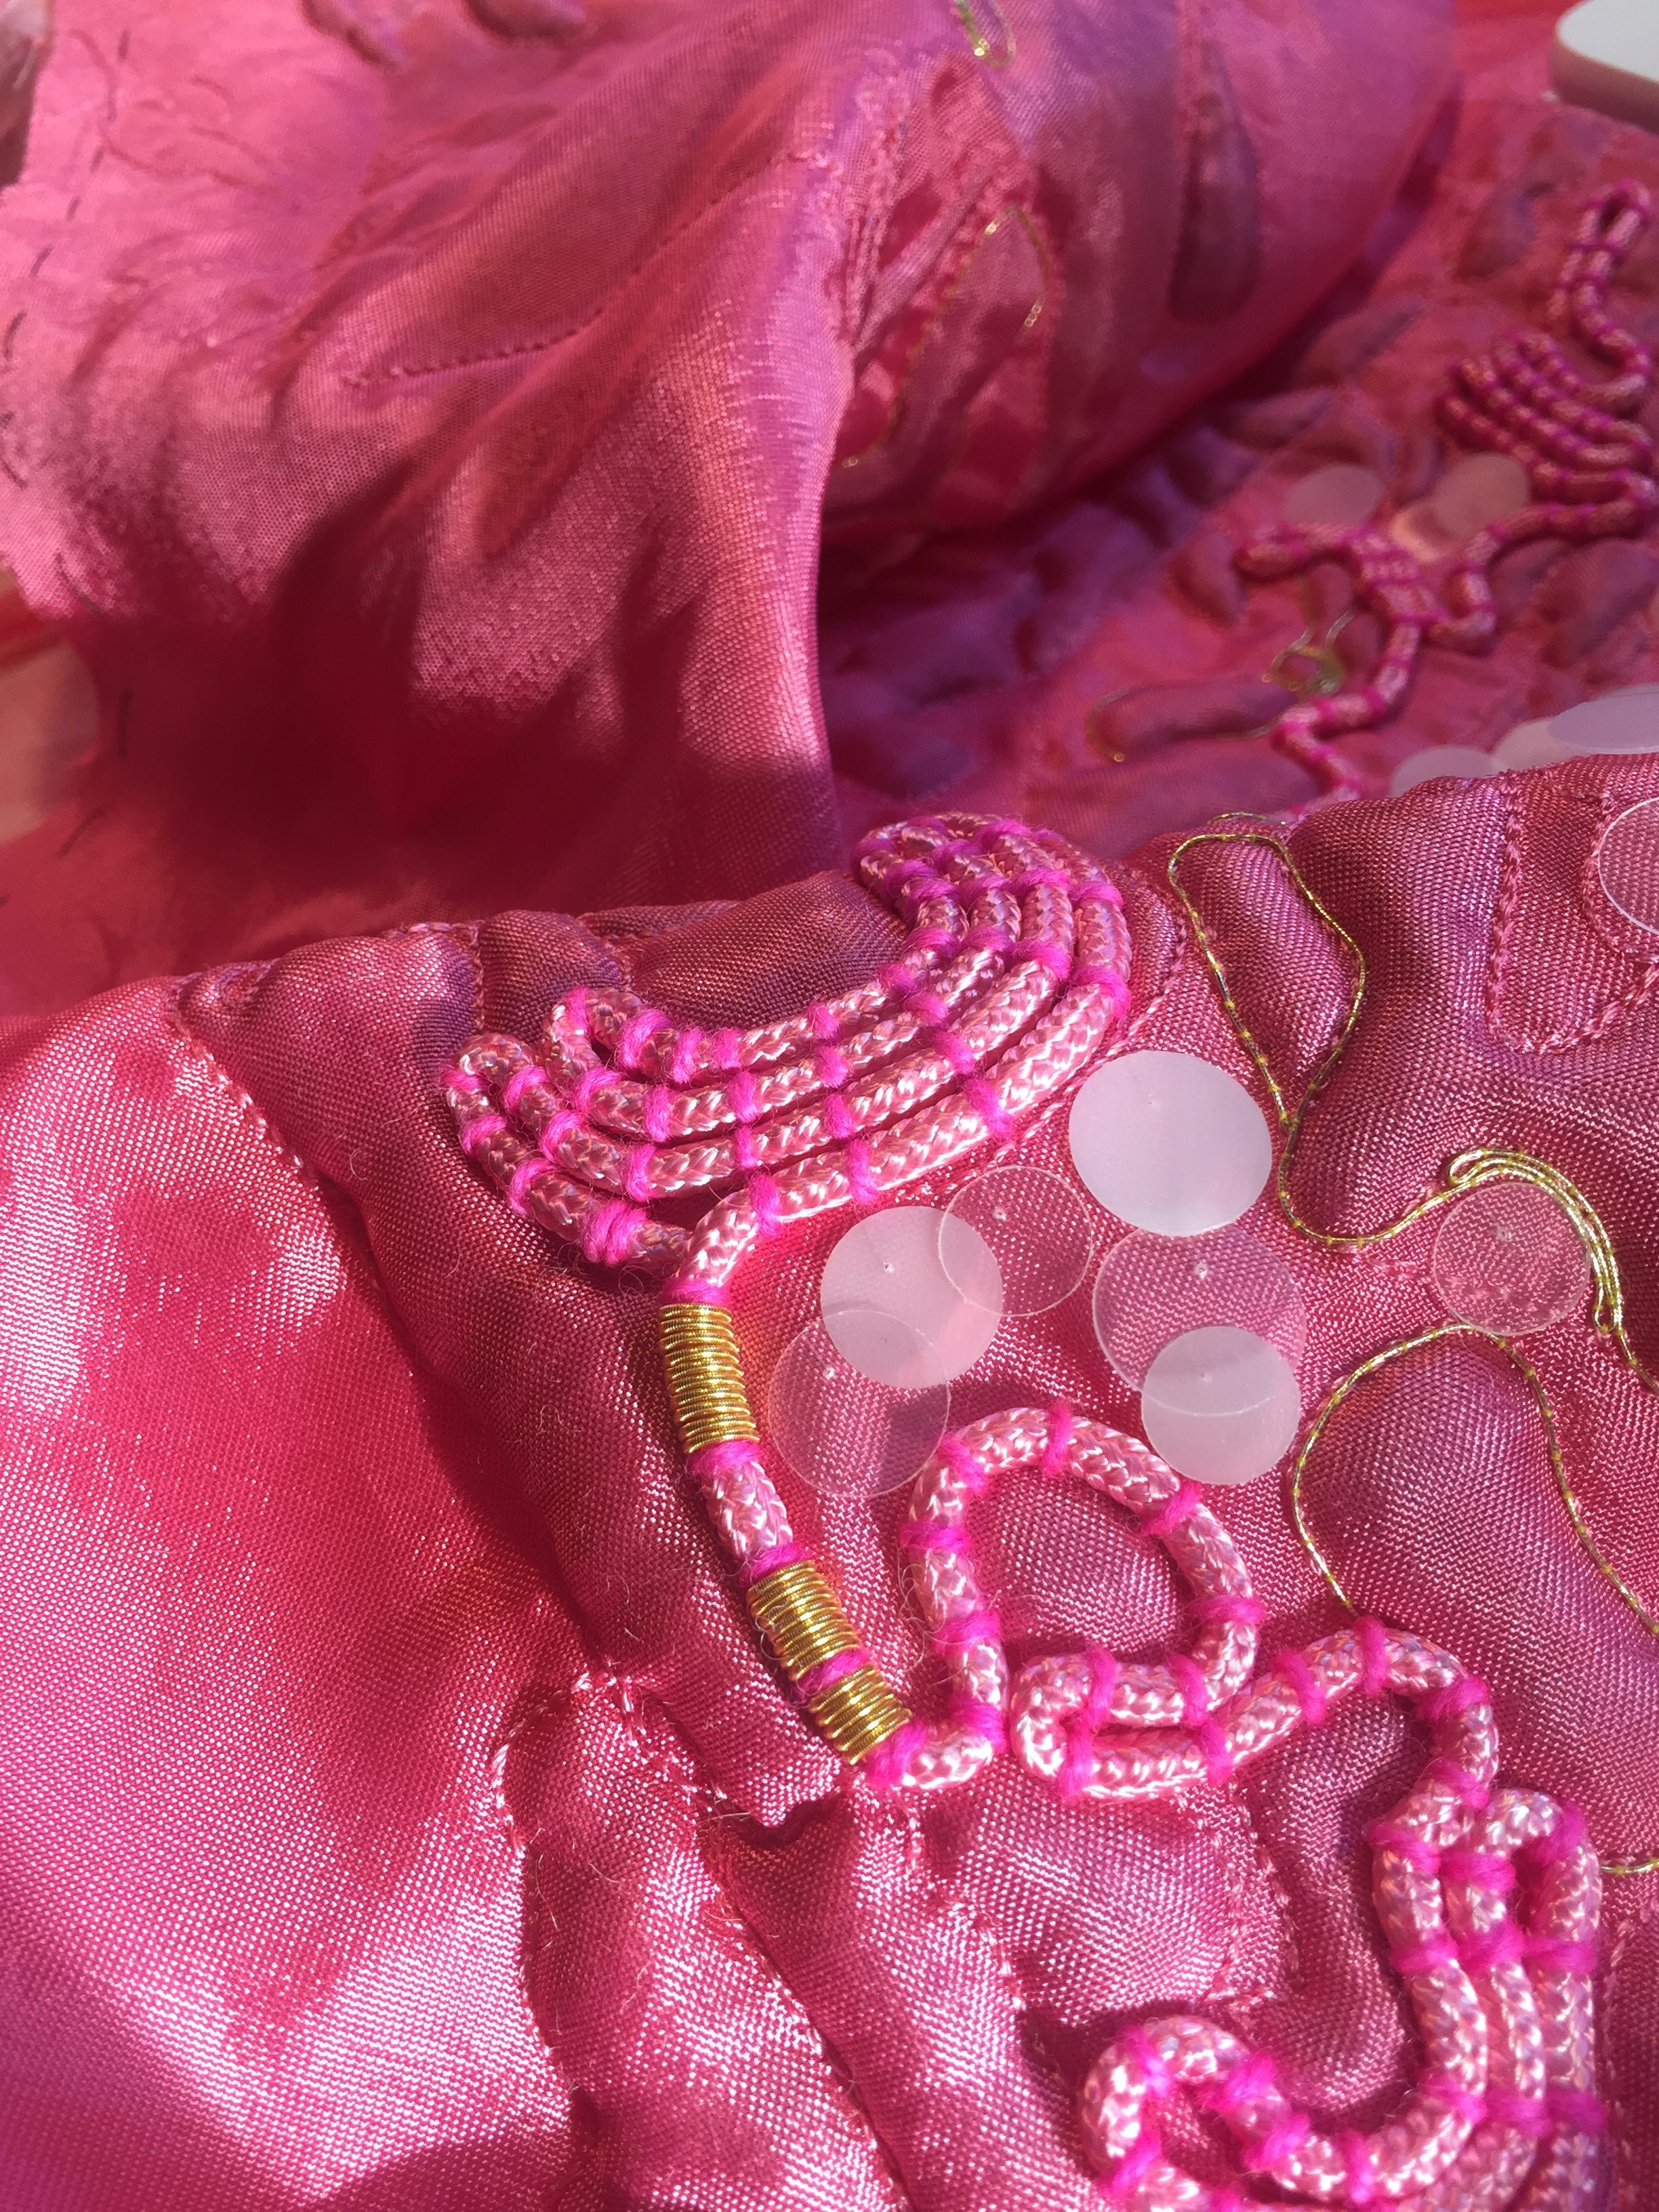 Pink Parka detail, by Fabienne Gassmann